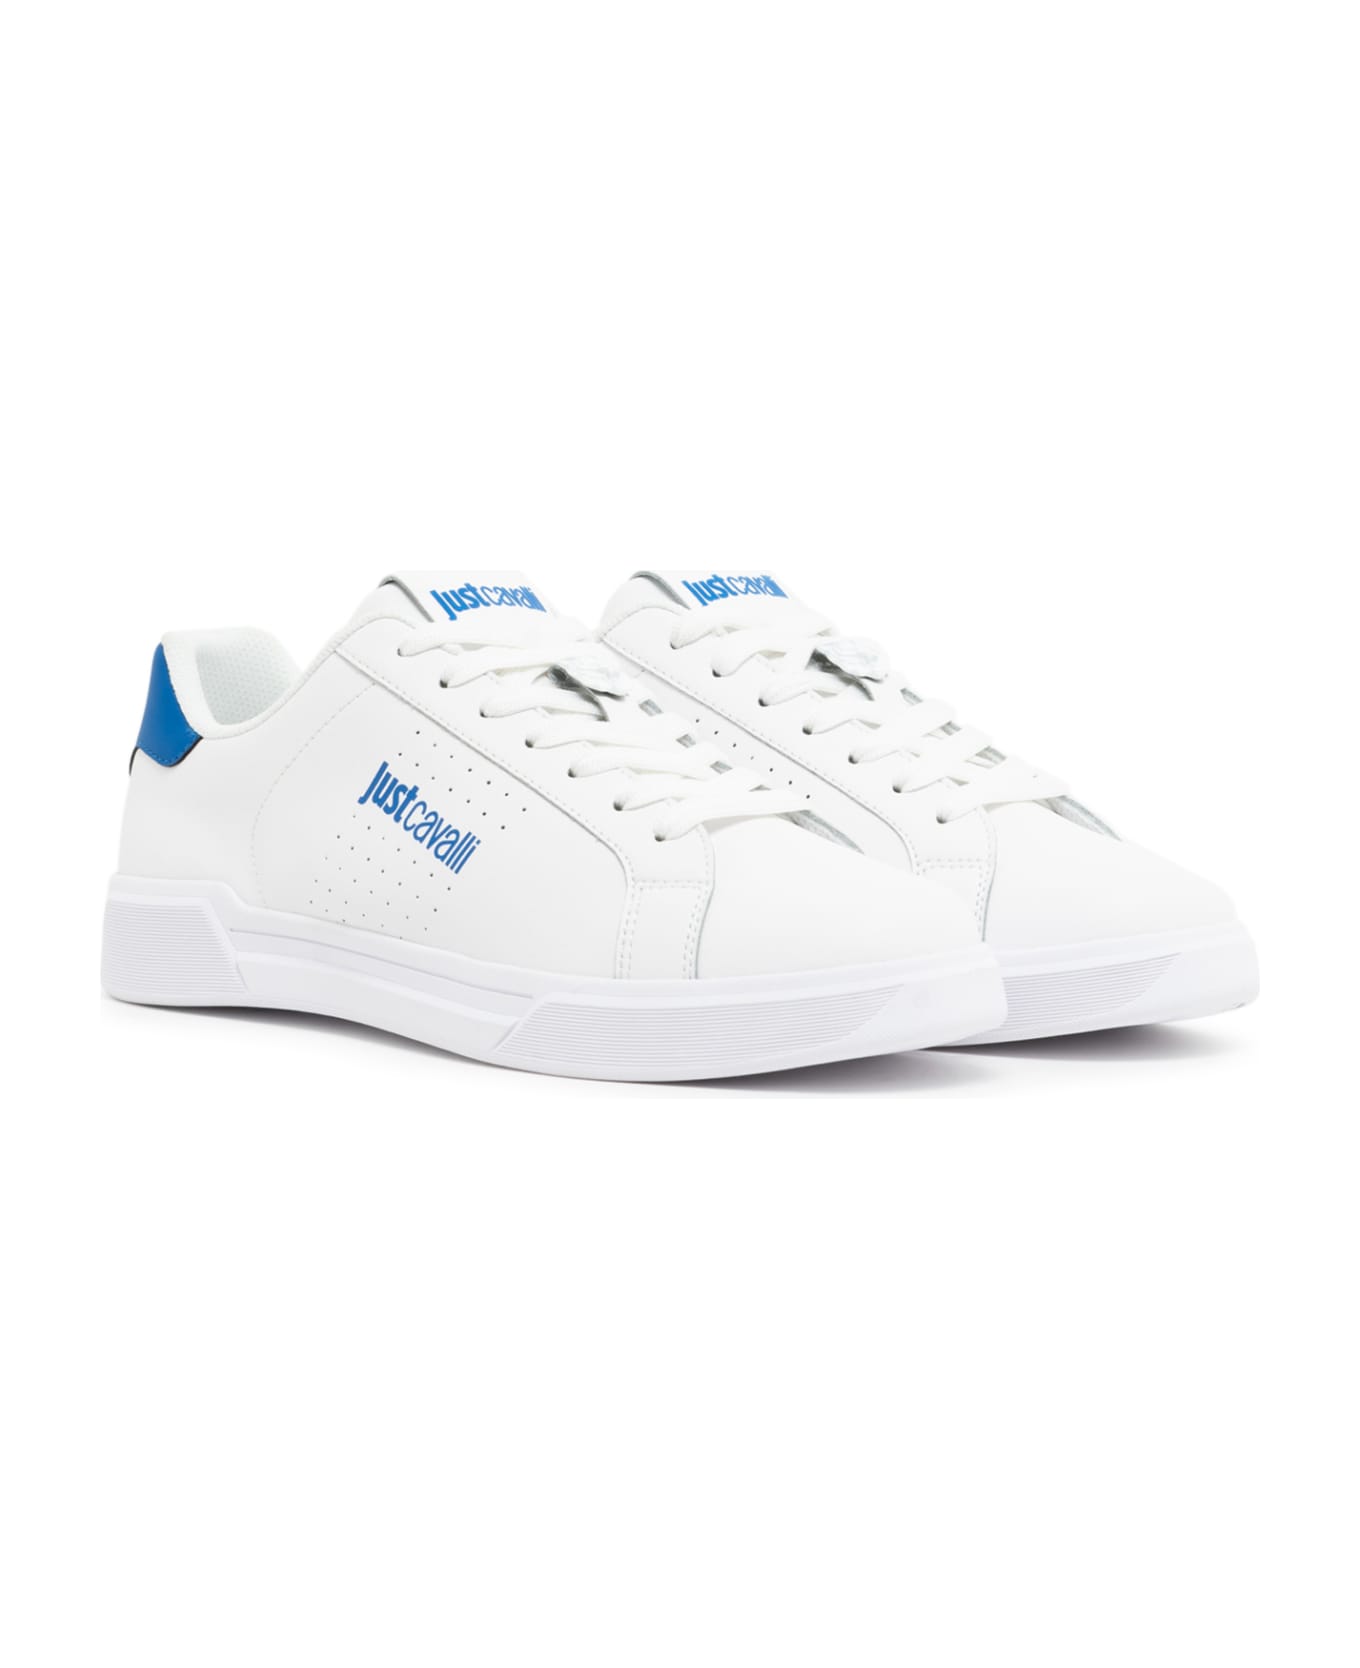 Just Cavalli Men's White Sneakers - White